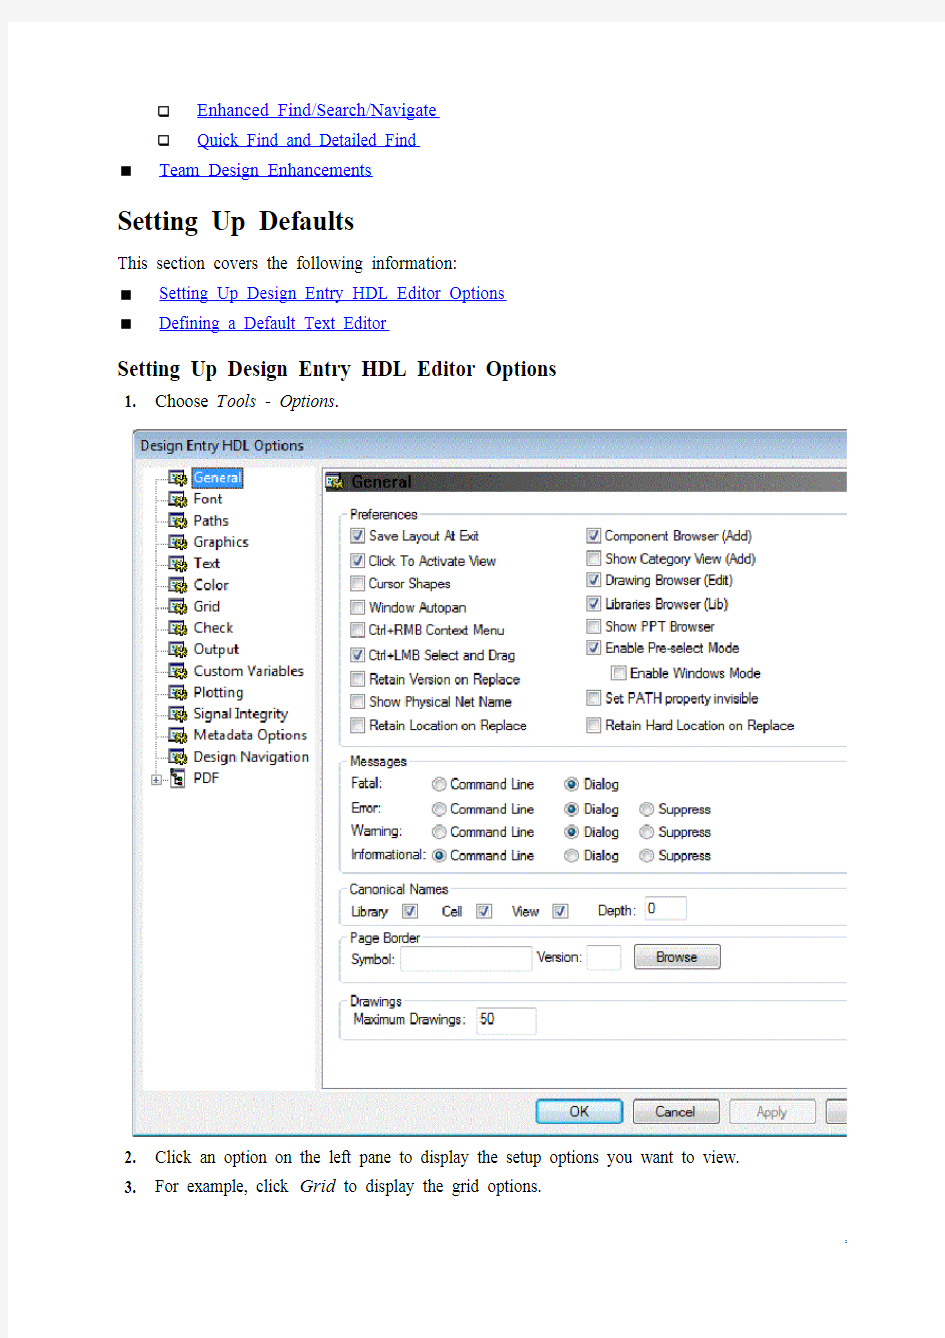 Allegro Design Entry HDL User Guide -- Design Entry HDL Editing Environment